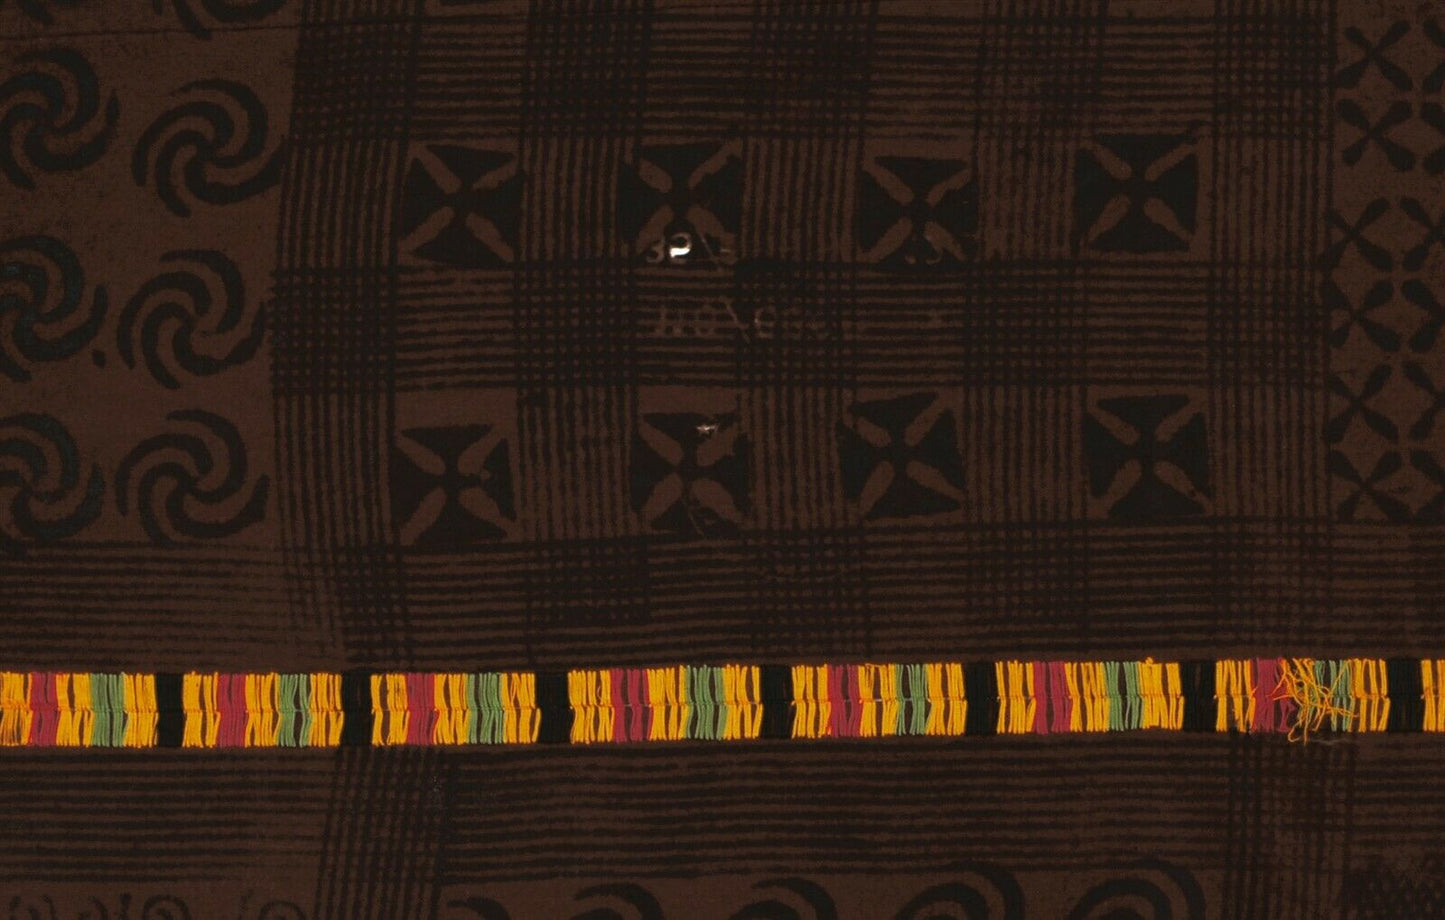 Adinkra Ashanti cloth Decoration African Ghana fabric hand stamped West Africa - Tribalgh